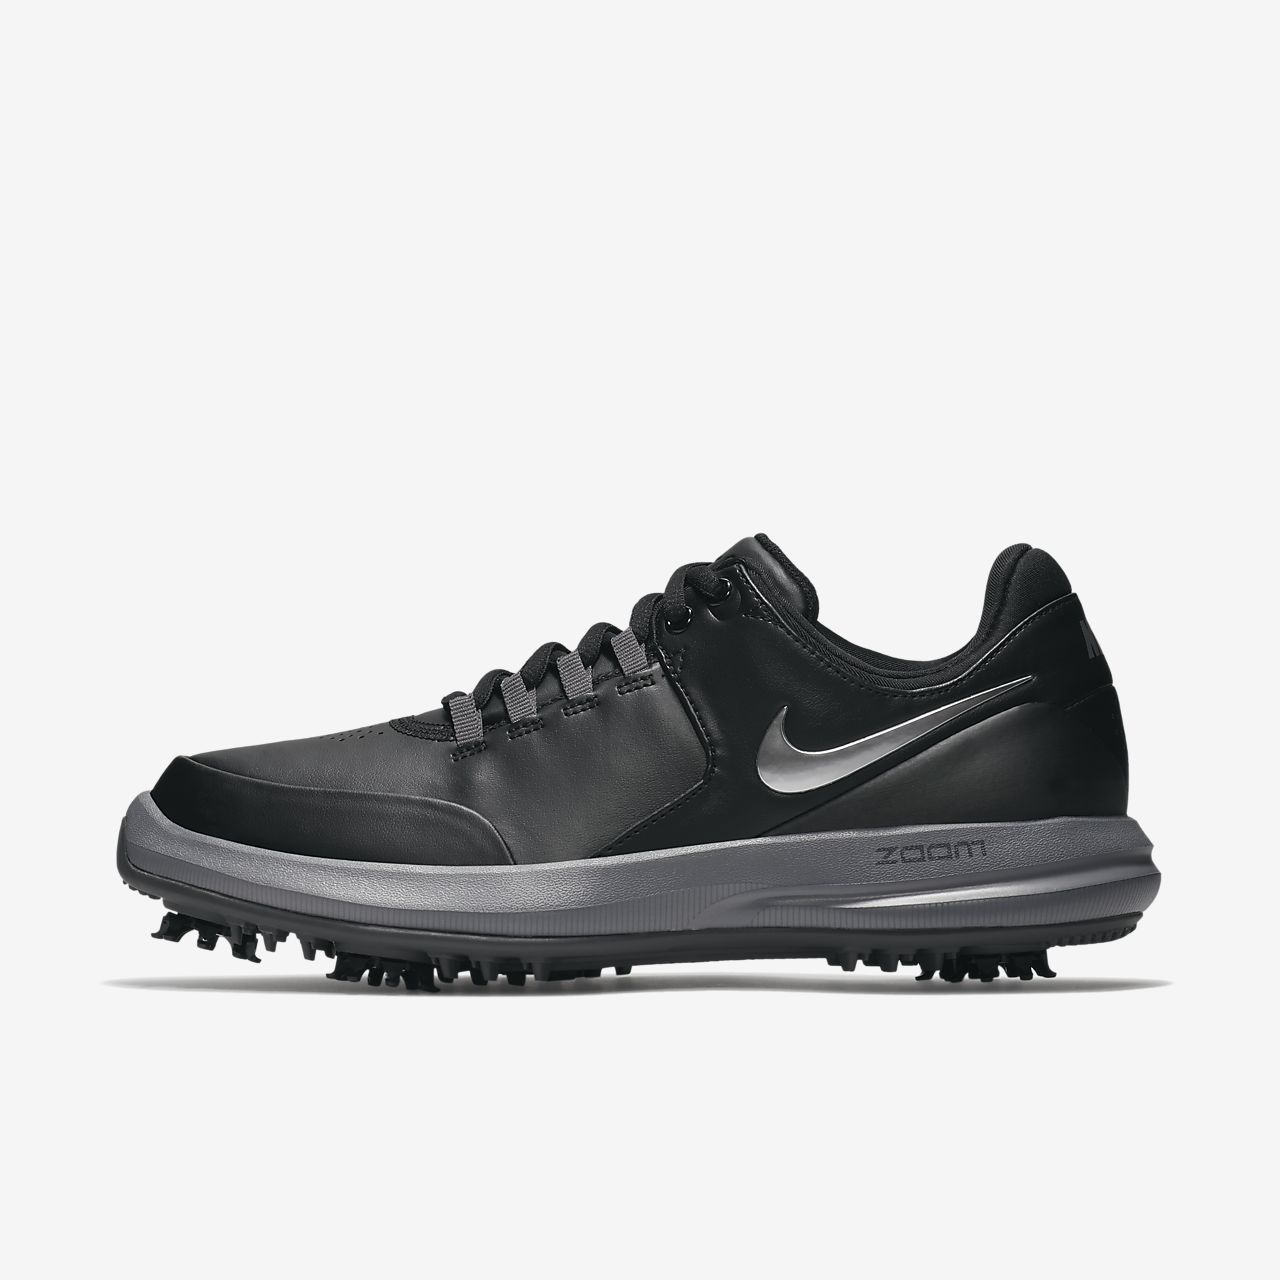 Nike [13] Medium Men's Air Accurate Shoes-Black, 909723 –